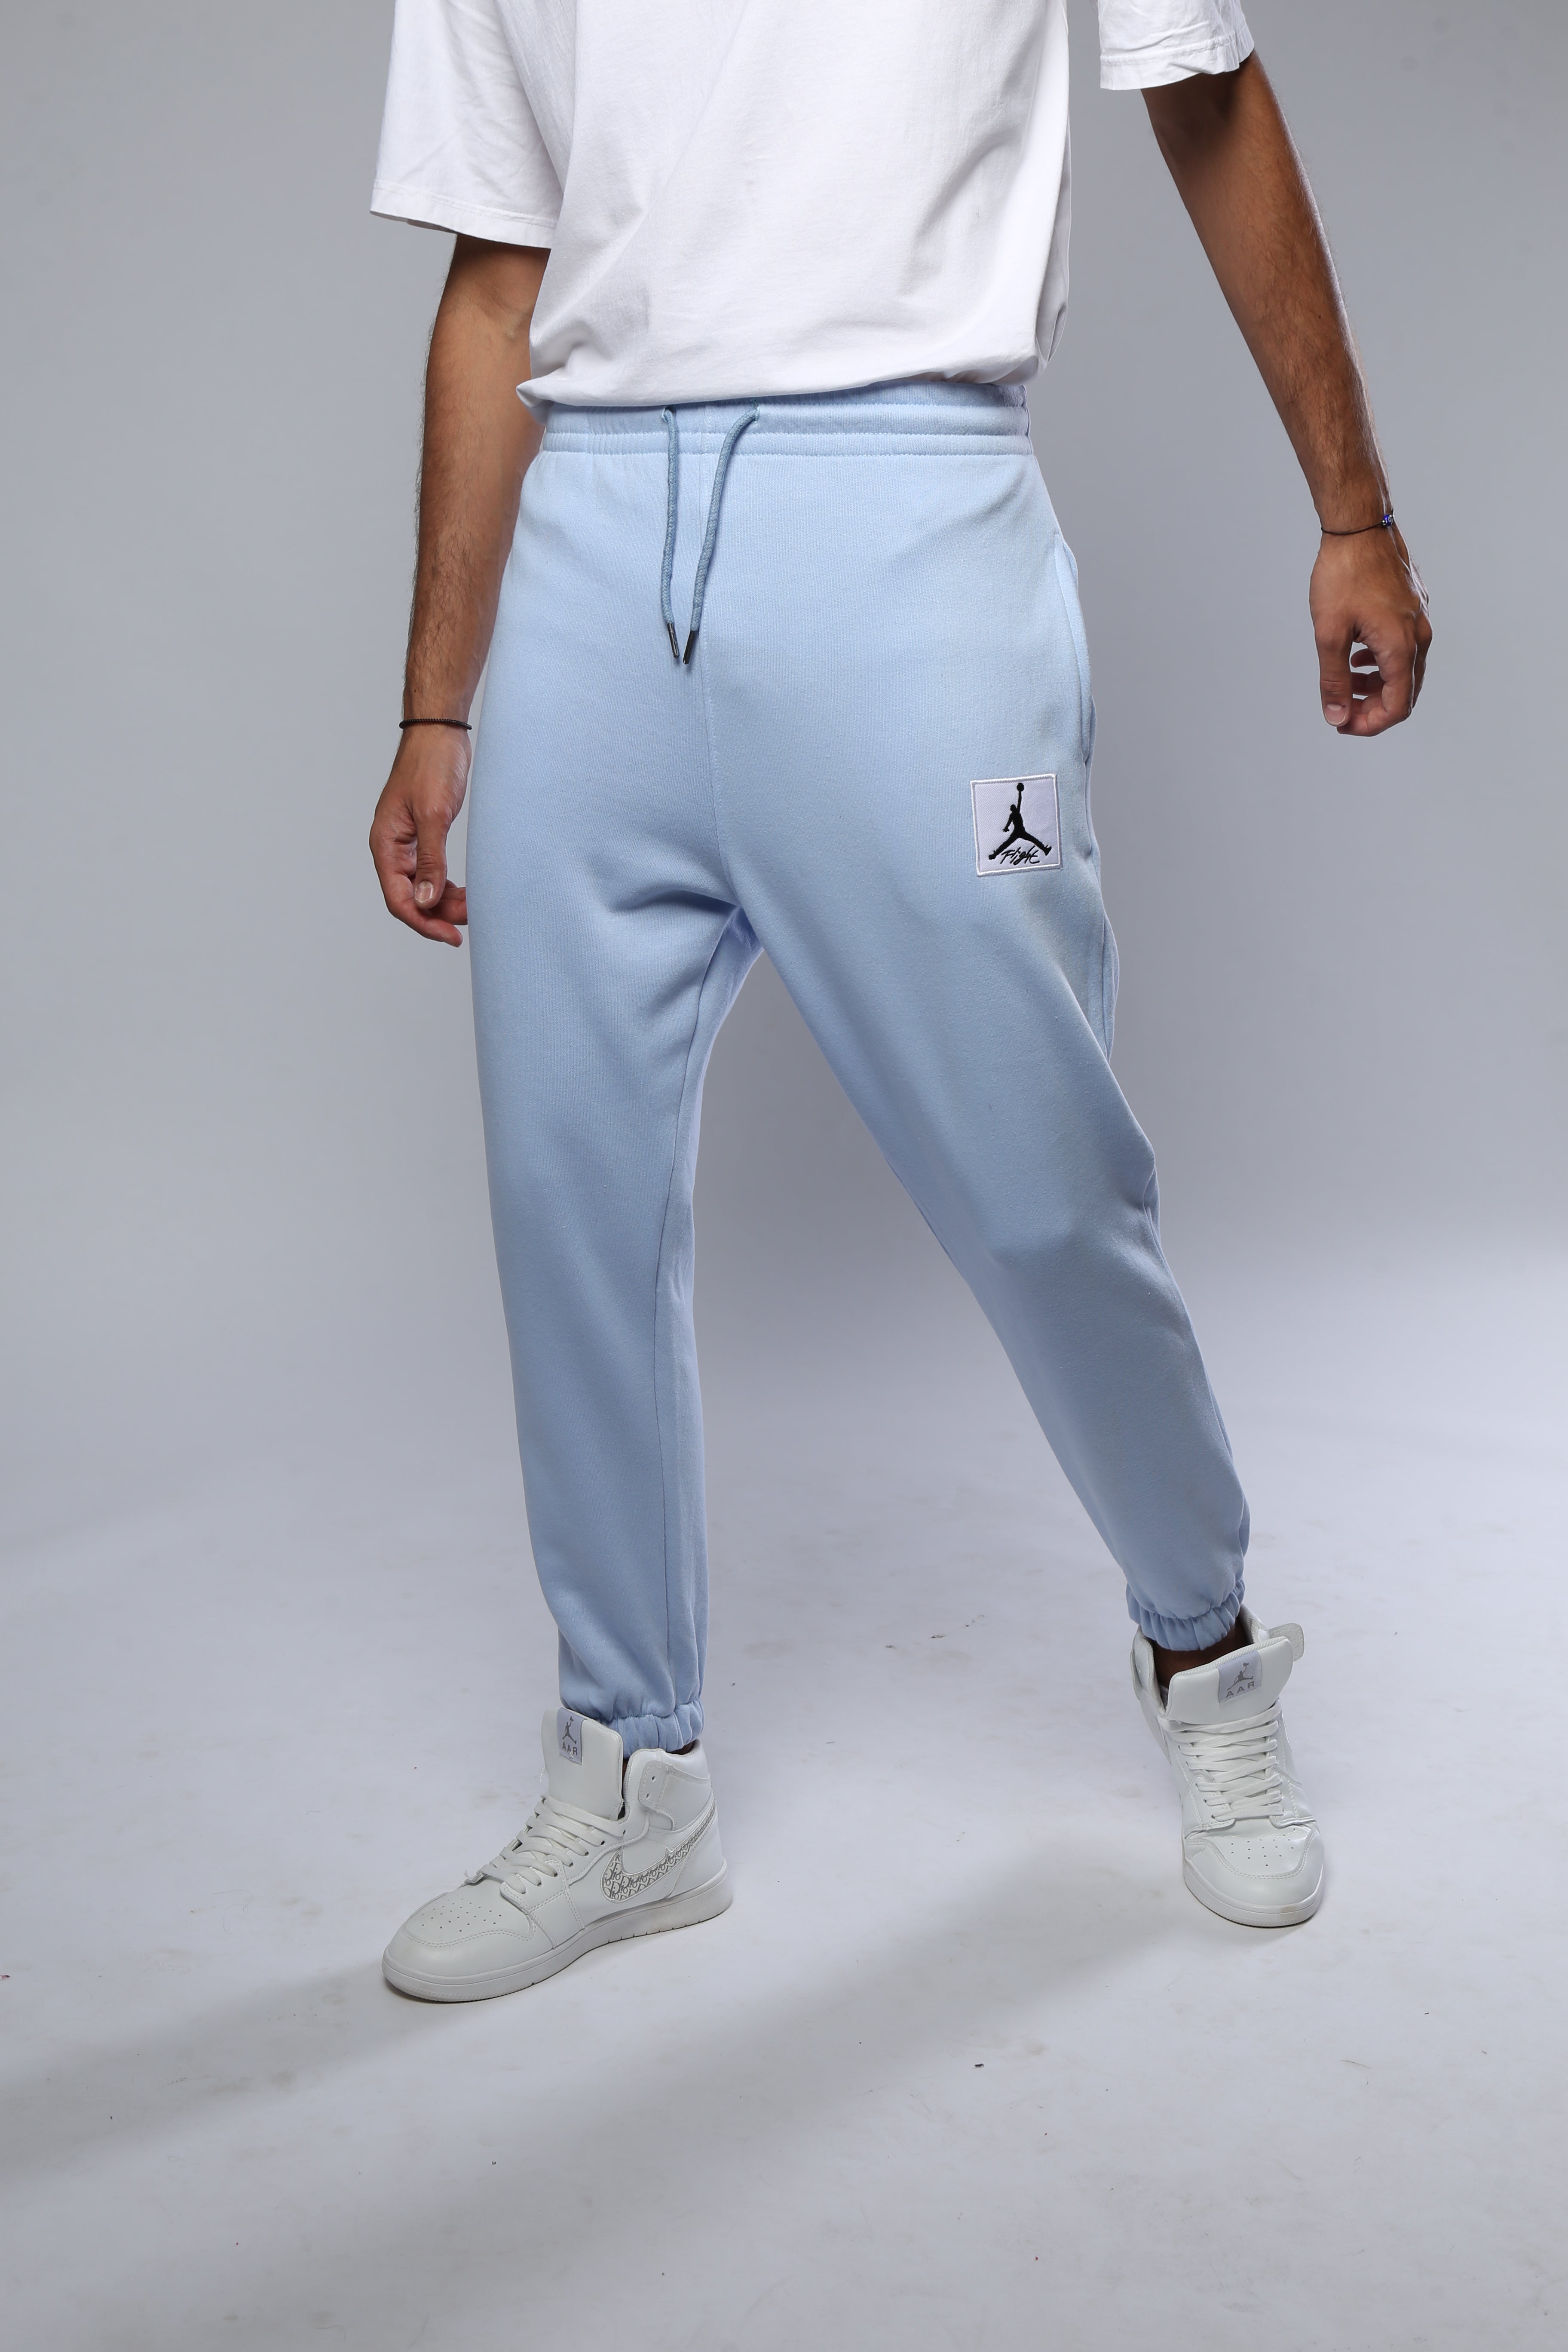 Boys Nike Air Jordan sweatpants & joggers - clothing & accessories - by  owner - apparel sale - craigslist